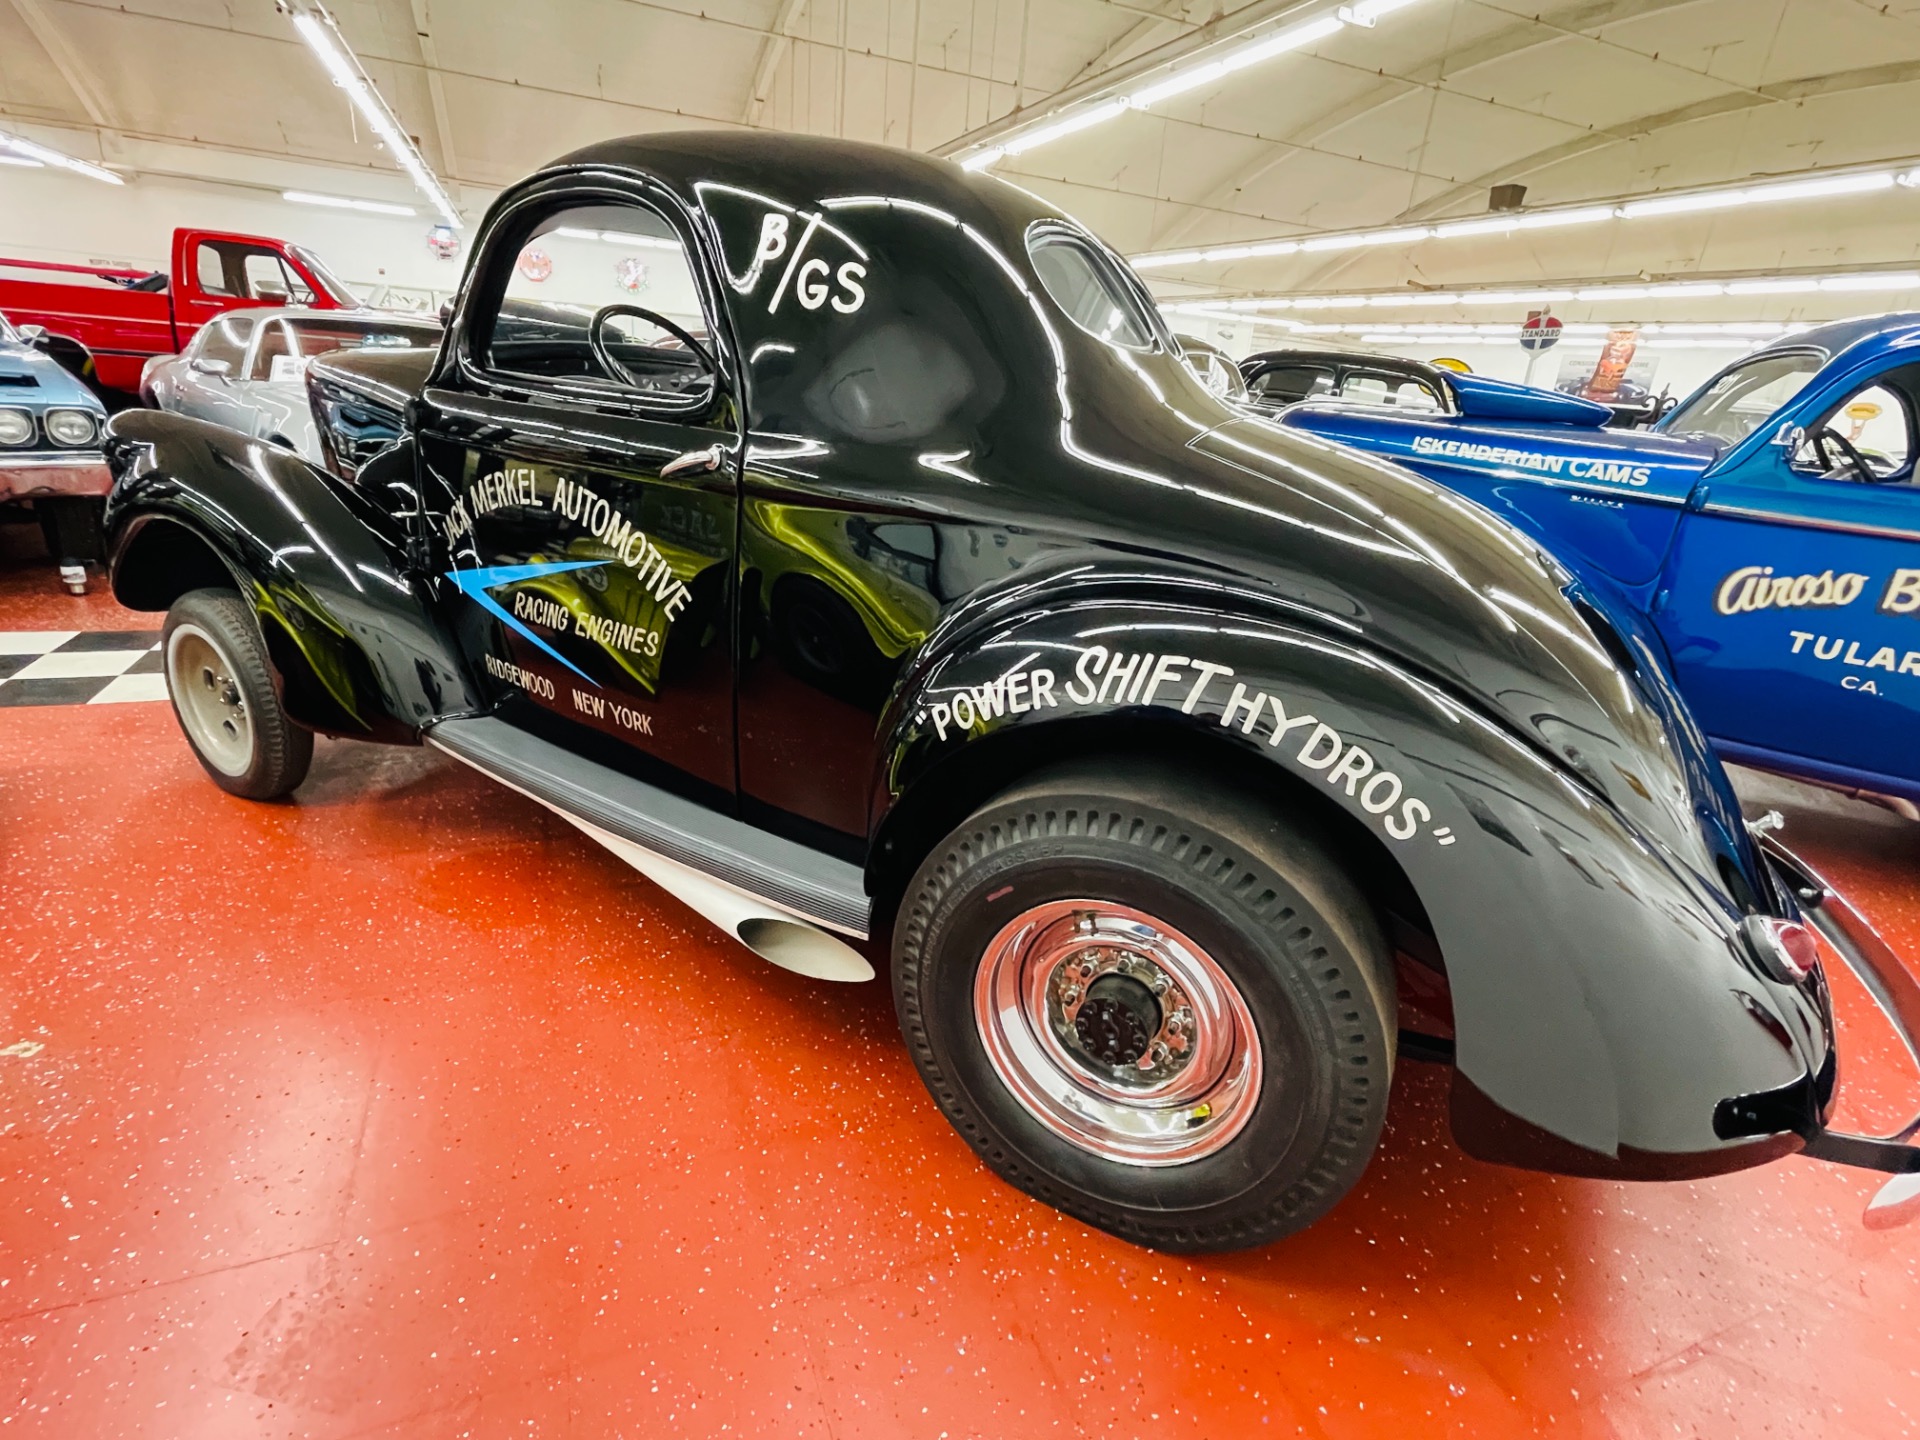 Used 1939 Willys Coupe - JACK MERKEL CHAMPIONSHIP CAR - B/GS RECORD HOLDER - | Mundelein, IL